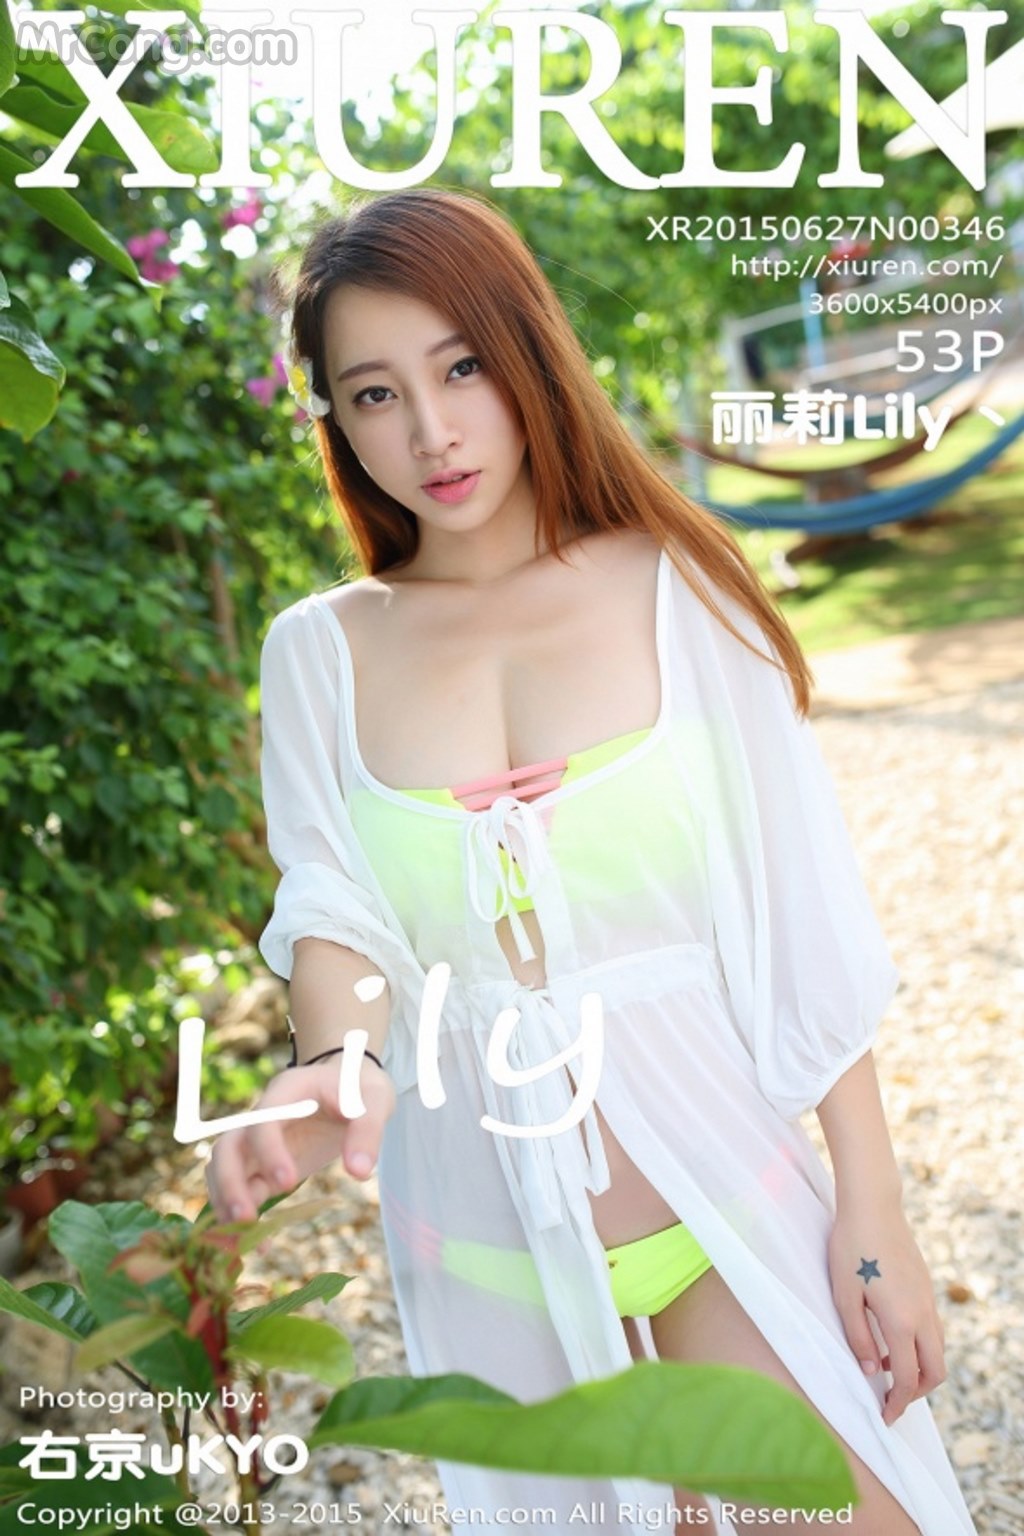 XIUREN No.346: Model 丽莉 Lily 丶 (53 photos) photo 3-12